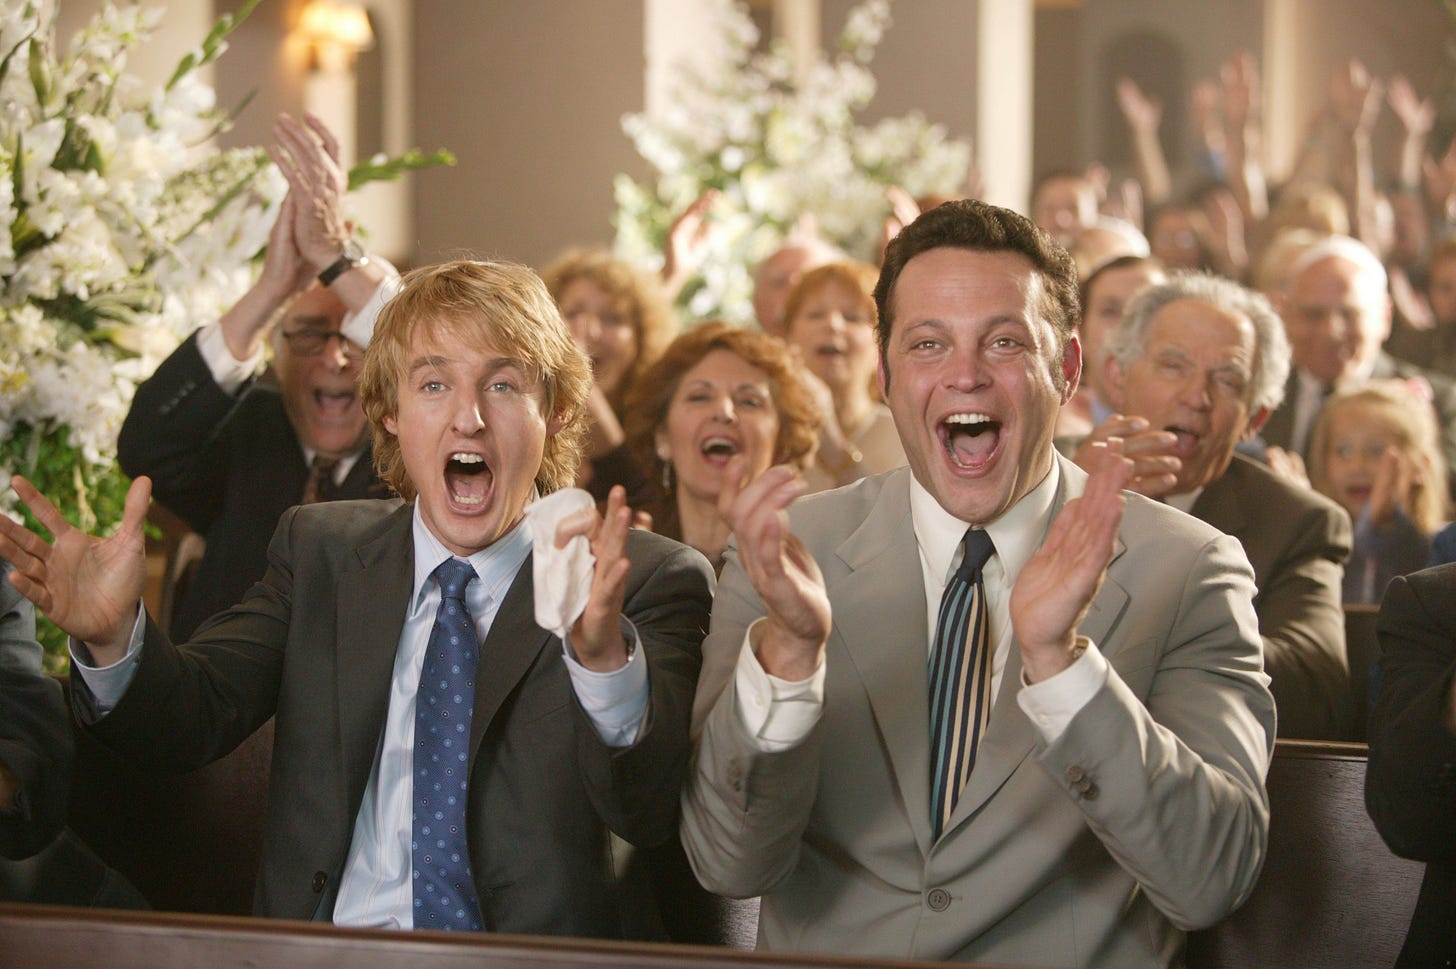 Wedding Crashers' at 15: Director finally explains monumental ending